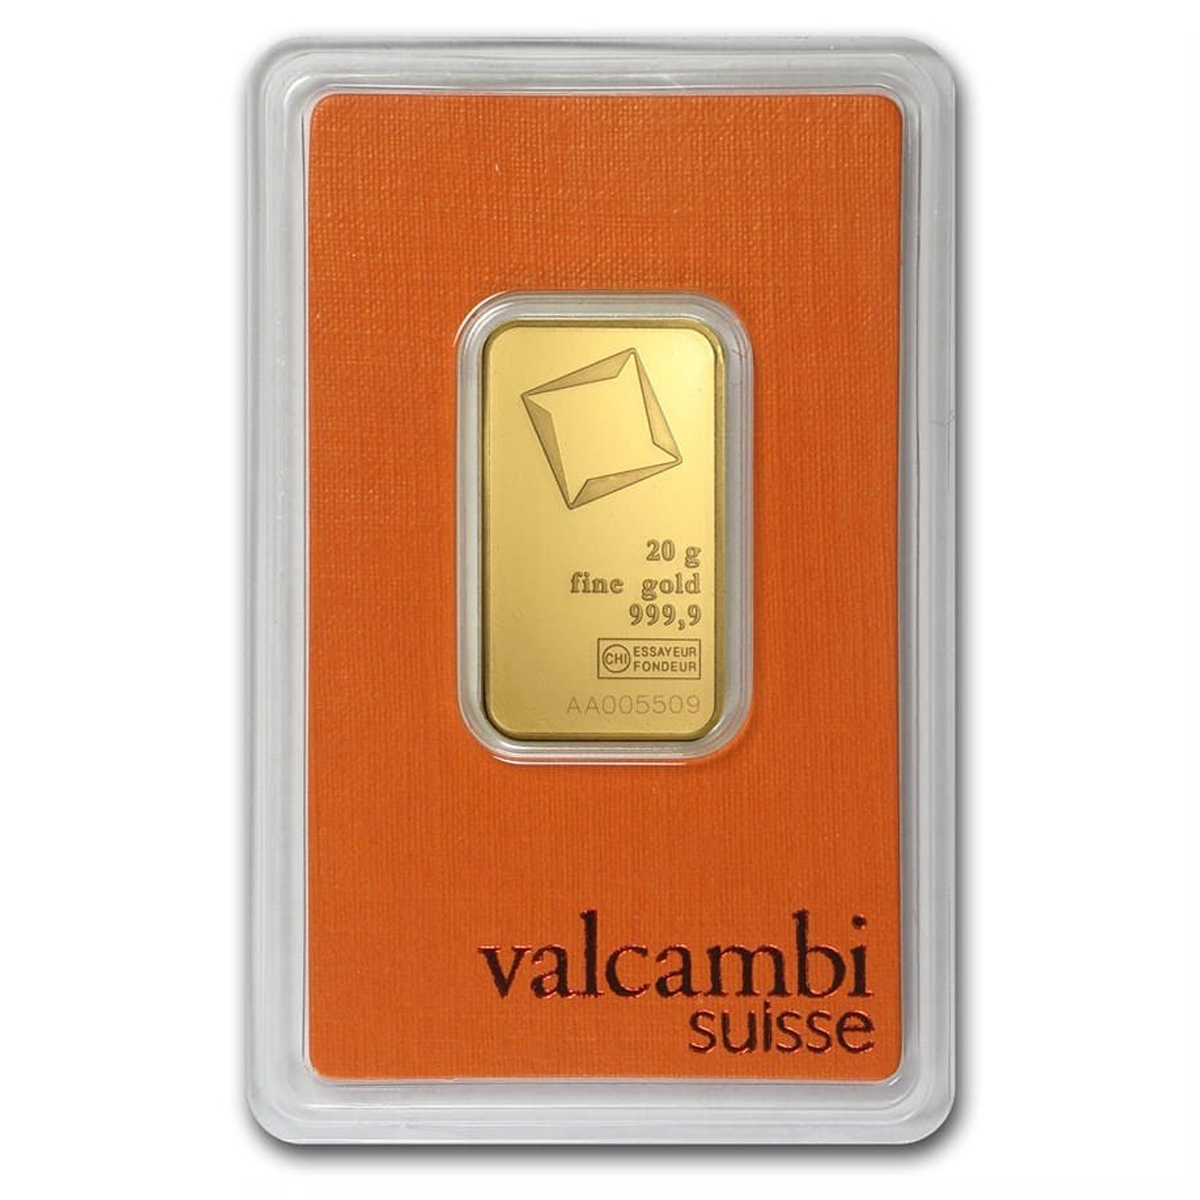 20 Grams Gold Bar - VALCAMBI